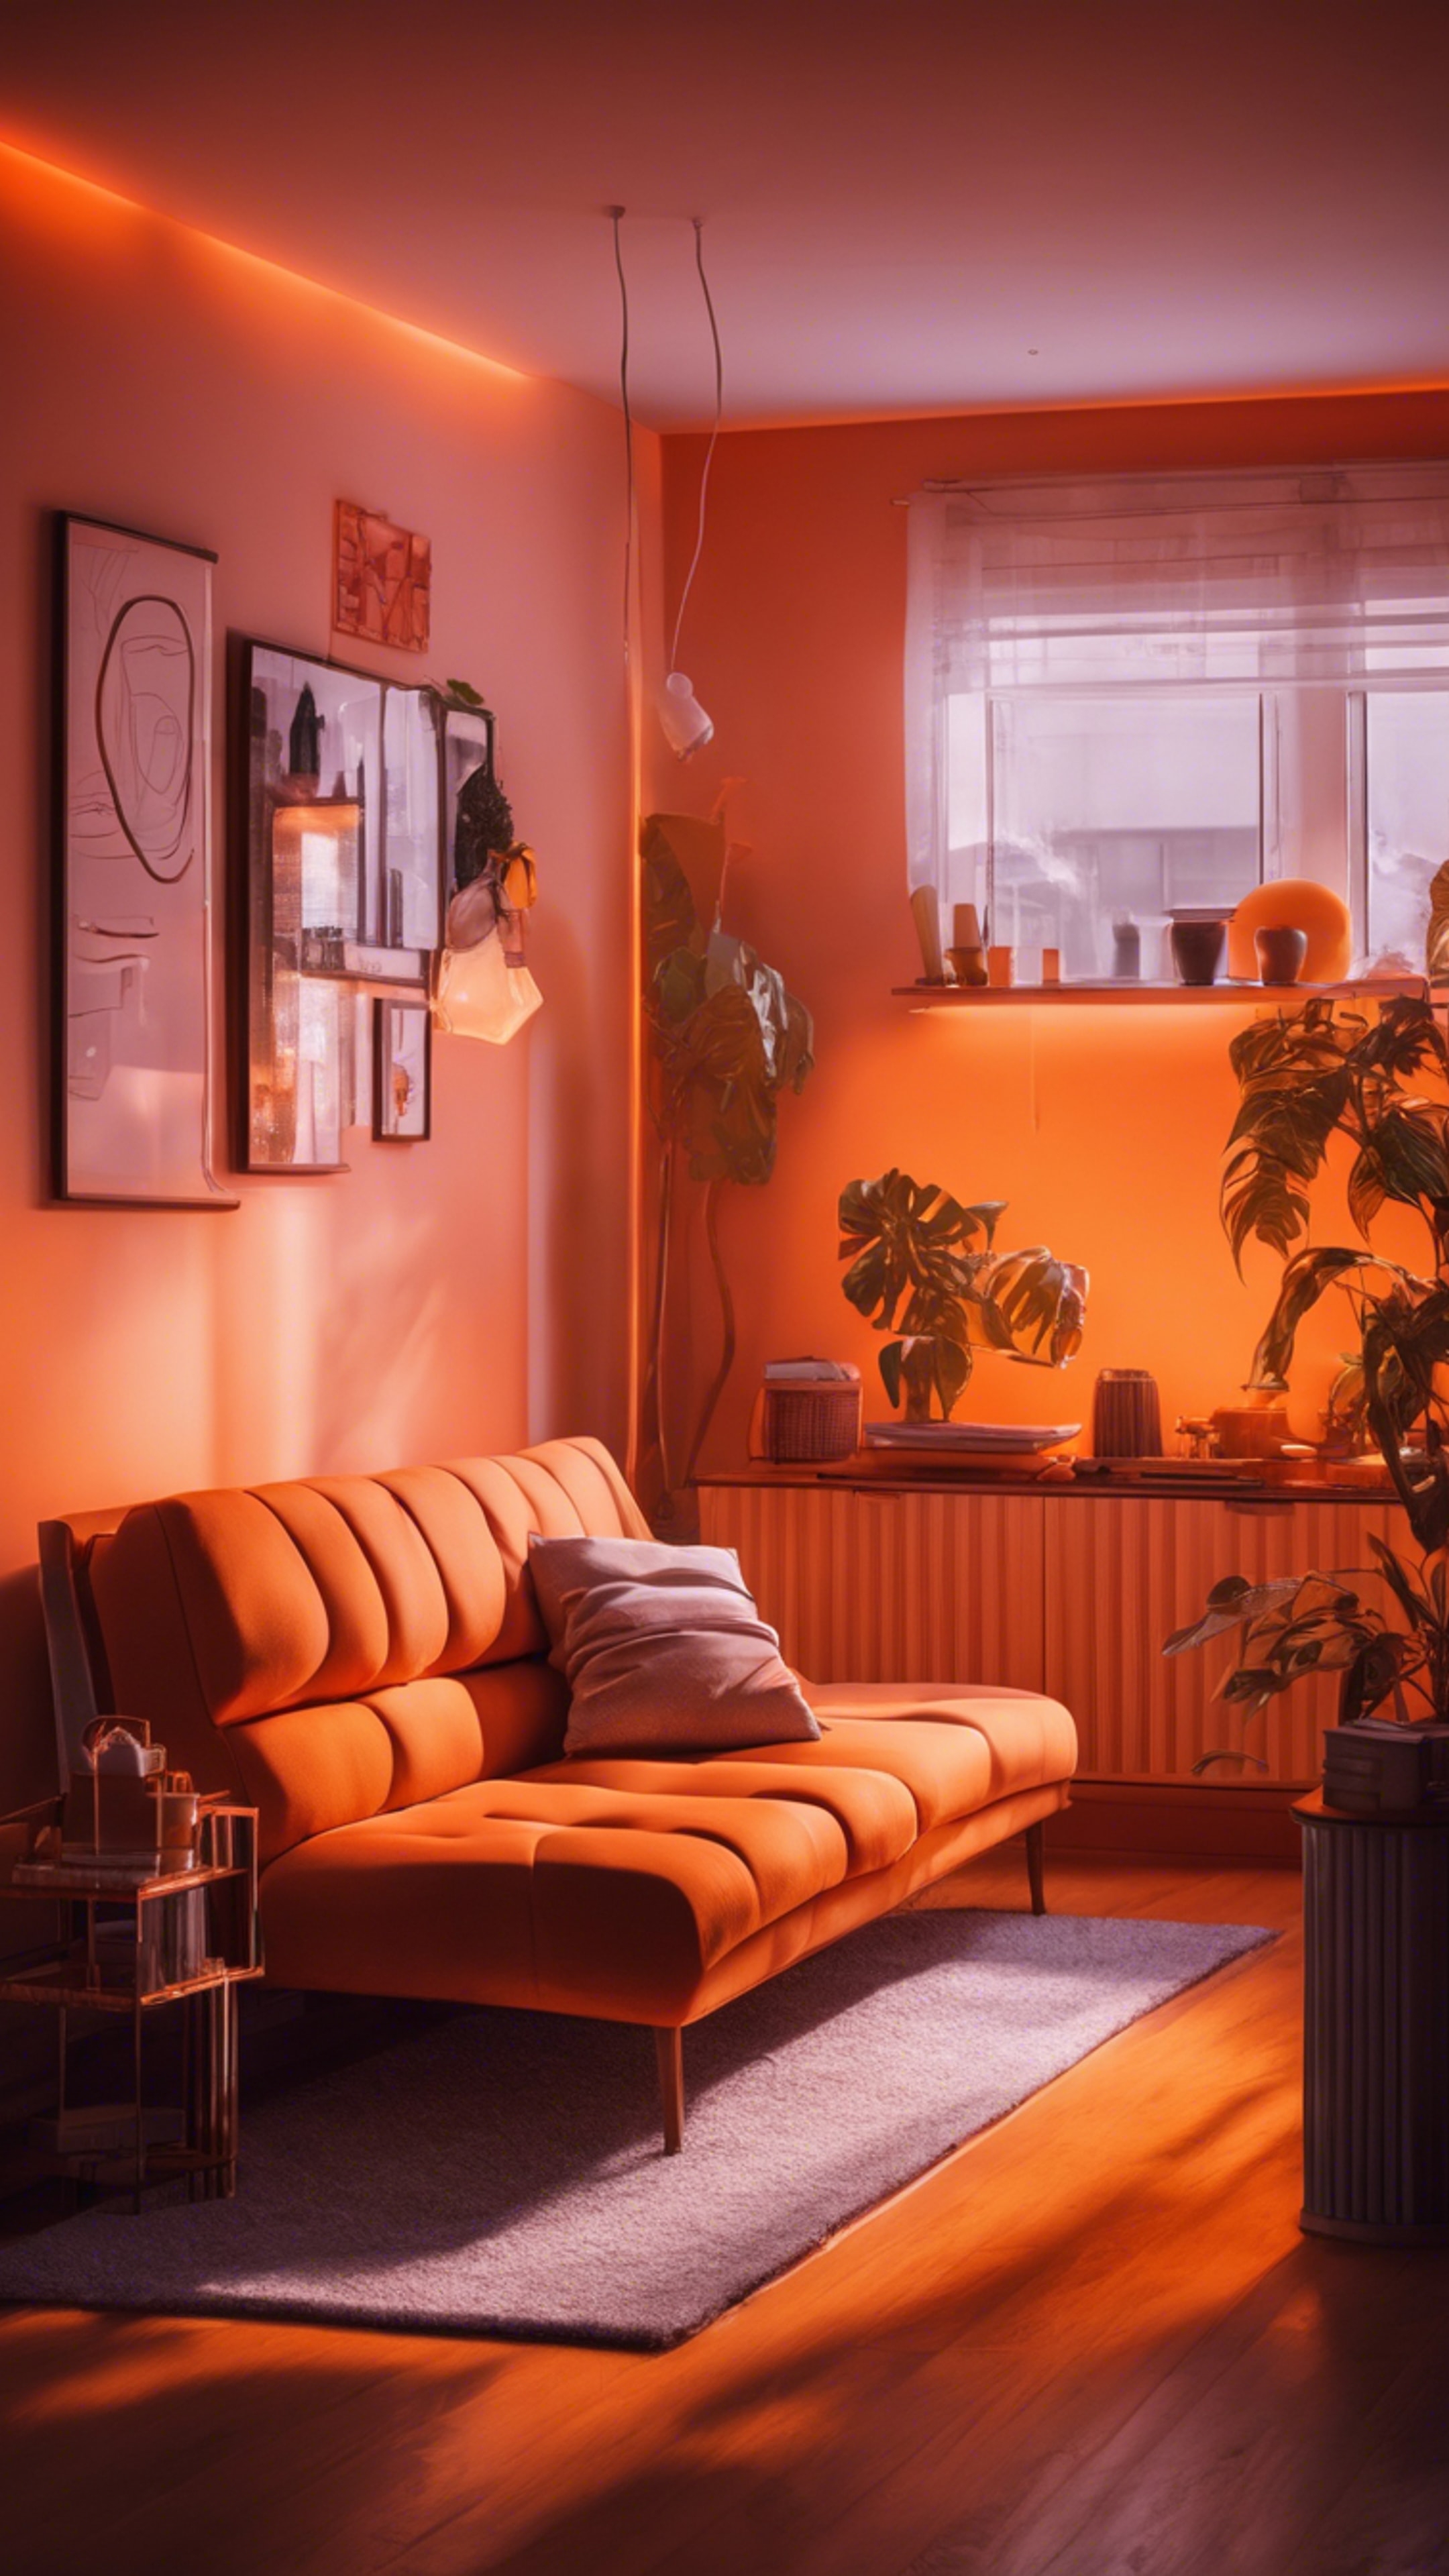 A fresh orange living room with trendy neon lights casting beautiful shadows. Hintergrund[39213640e9864c1aa0c4]